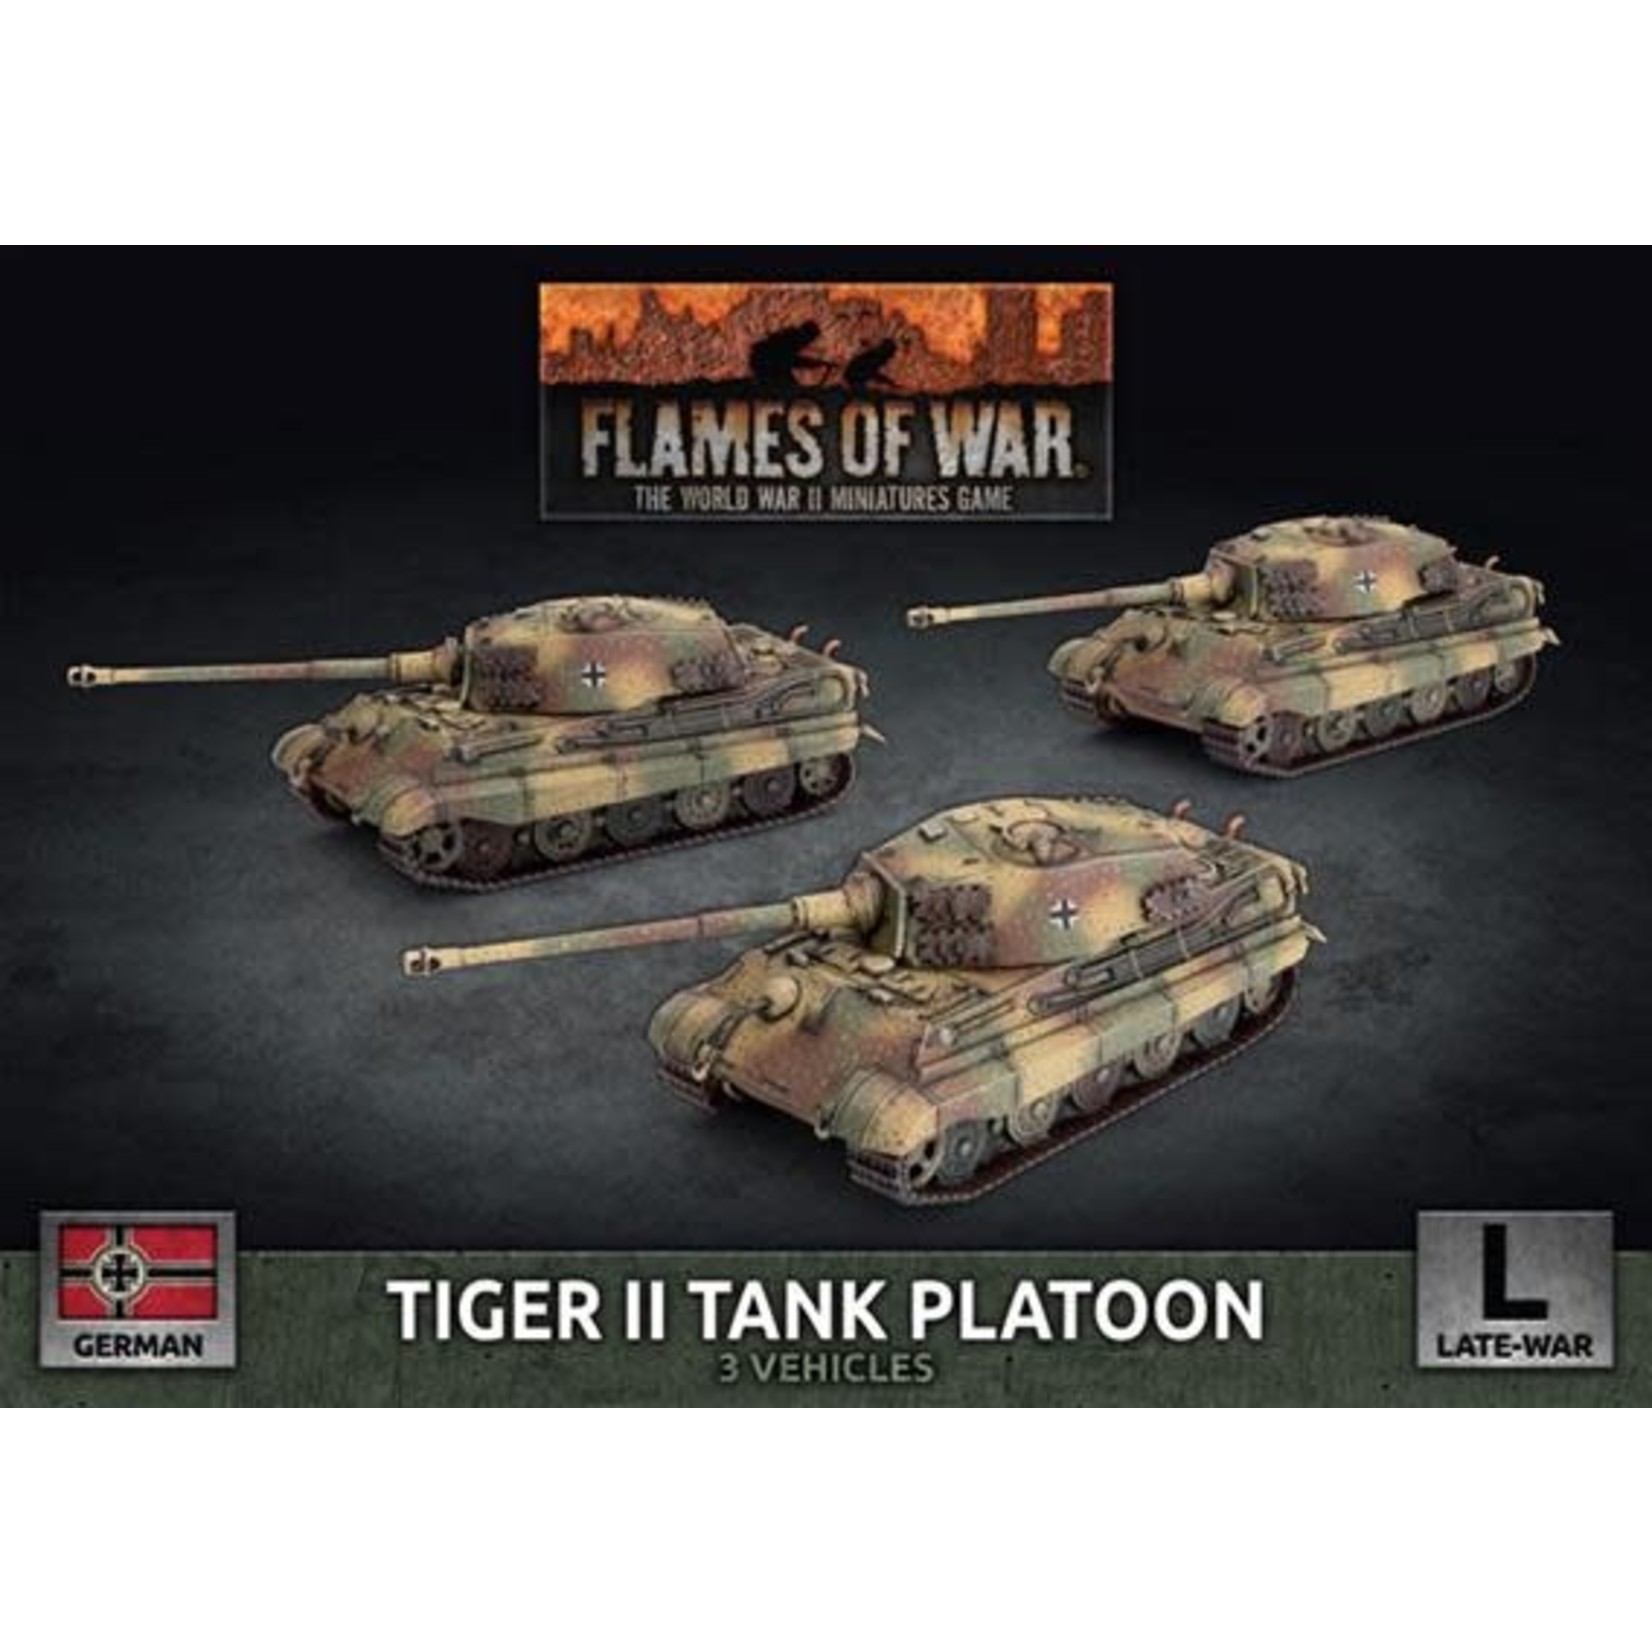 Battlefront Flames of War: German: Tiger II Tank Platoon (3) Set